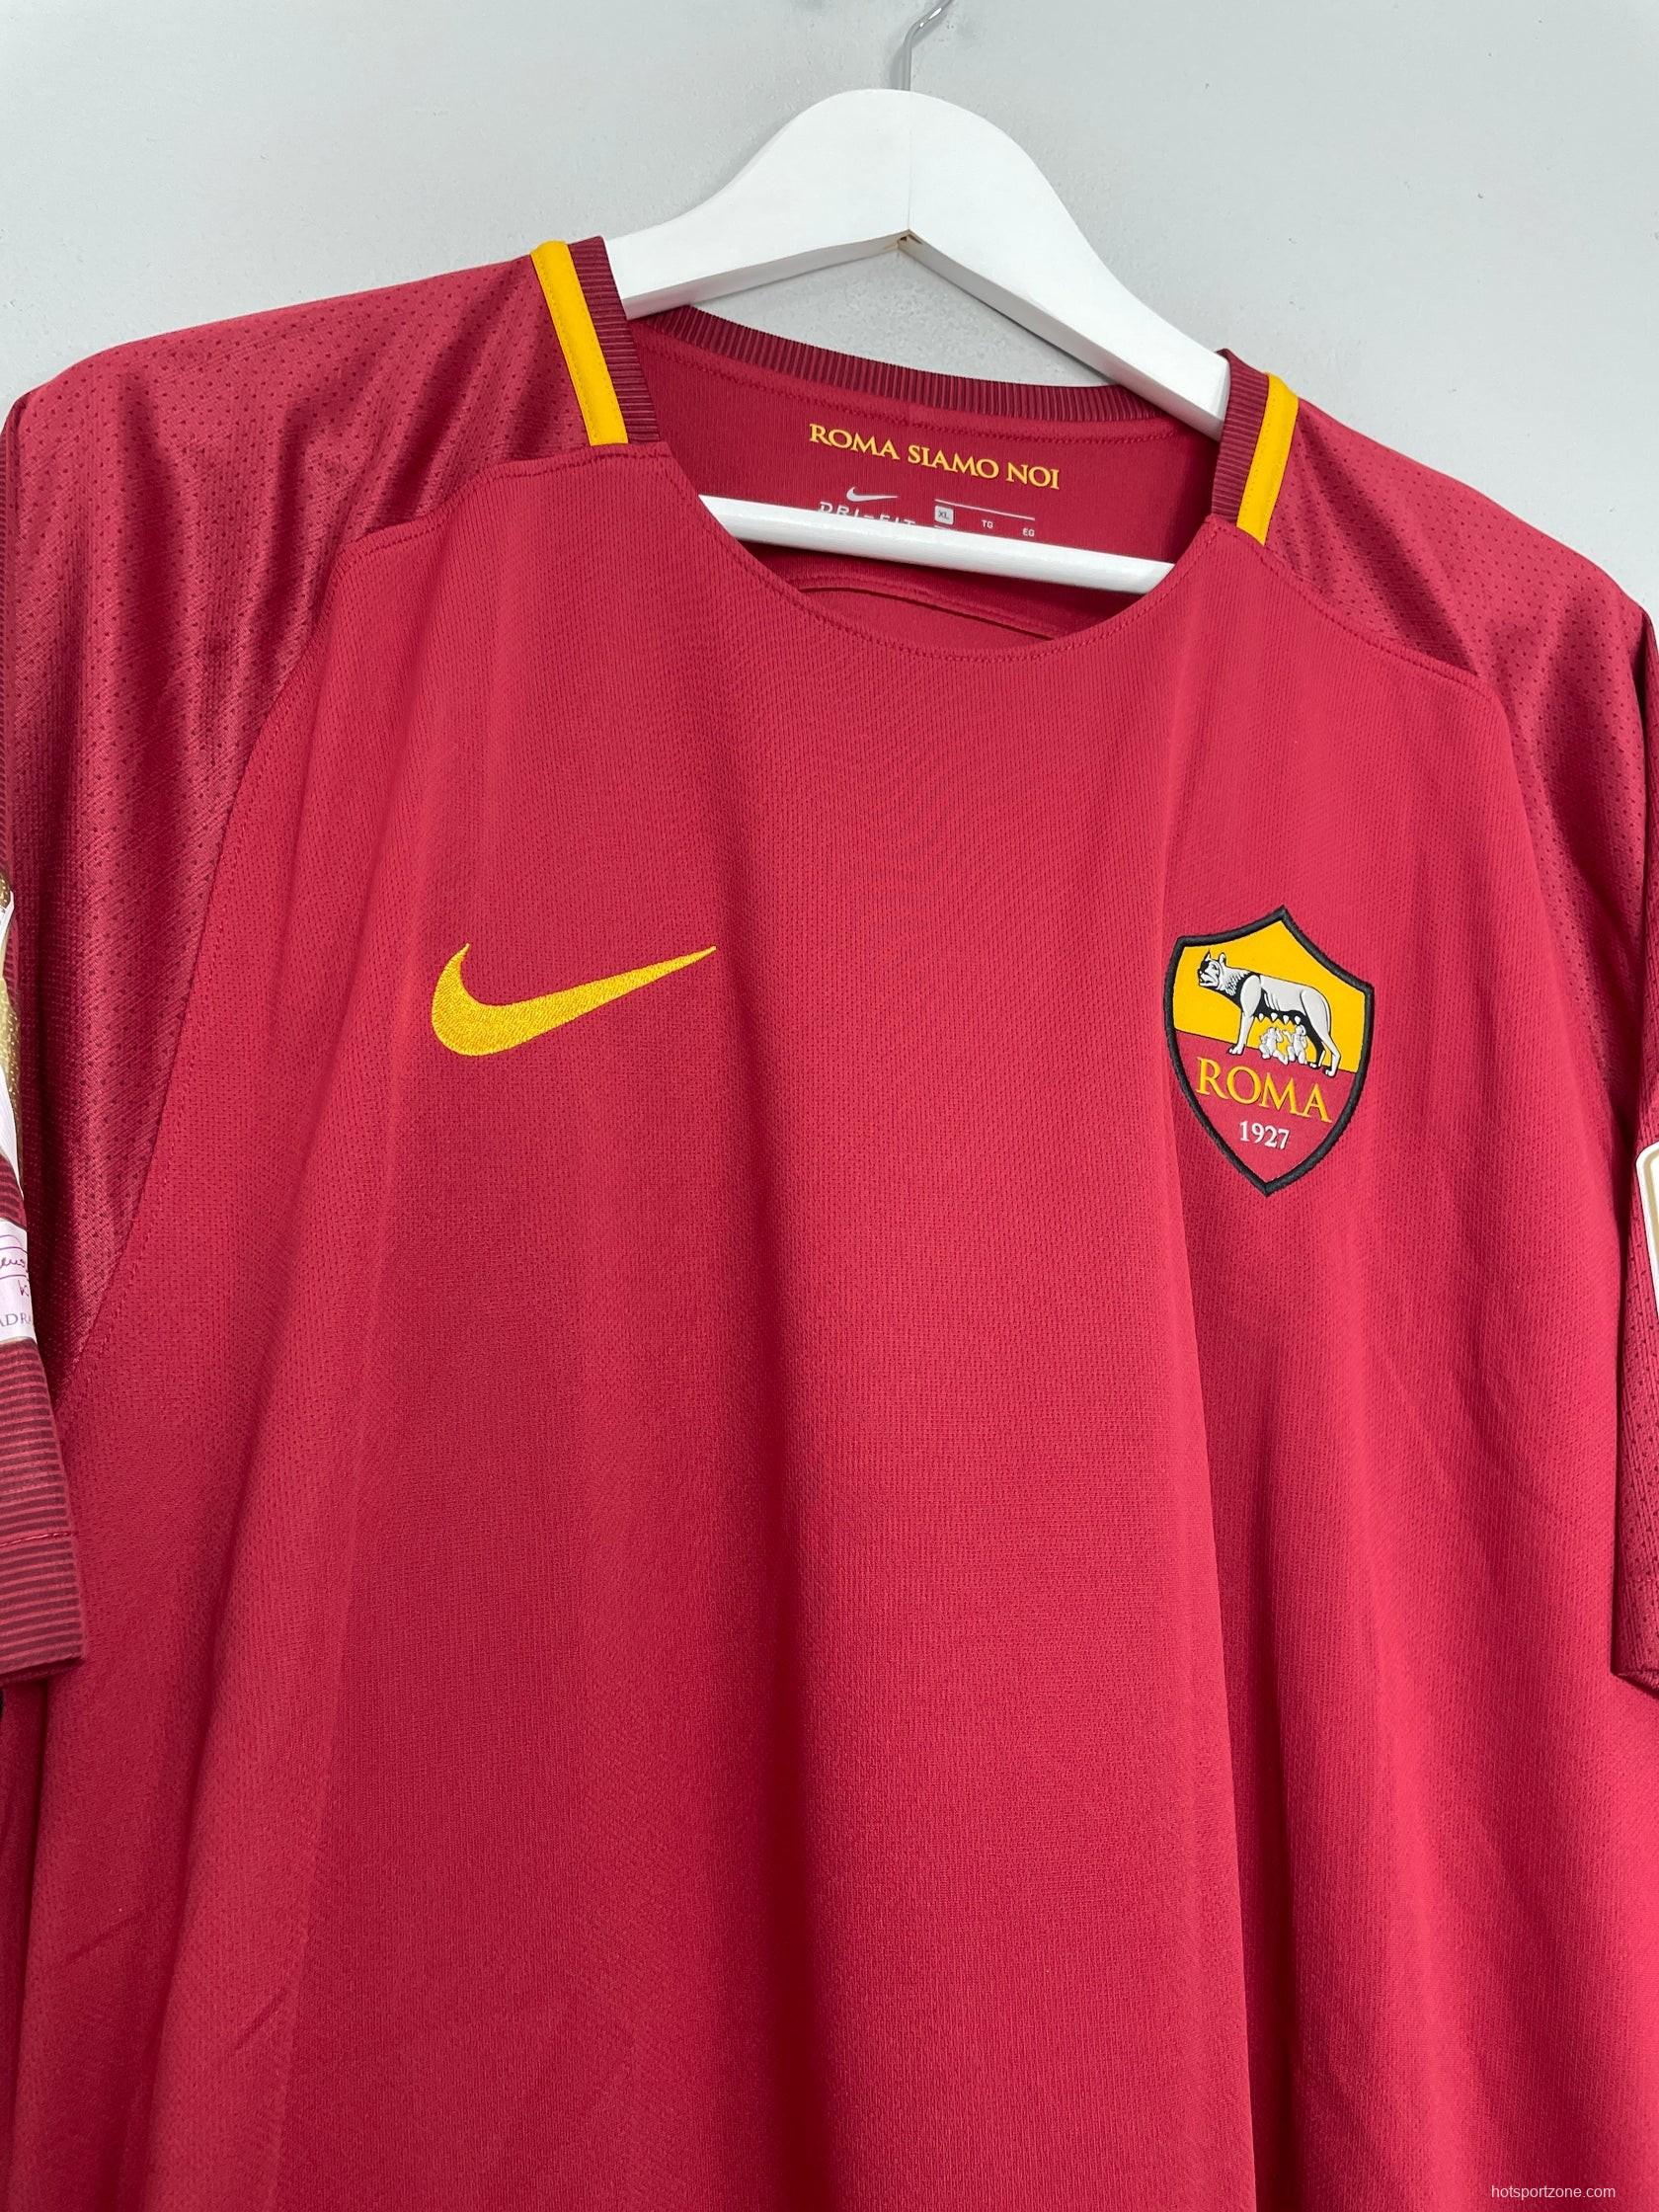 Retro 17/18 AS Roma Home Jersey Francesco Totti Signature Jersey Tribute For Last Match